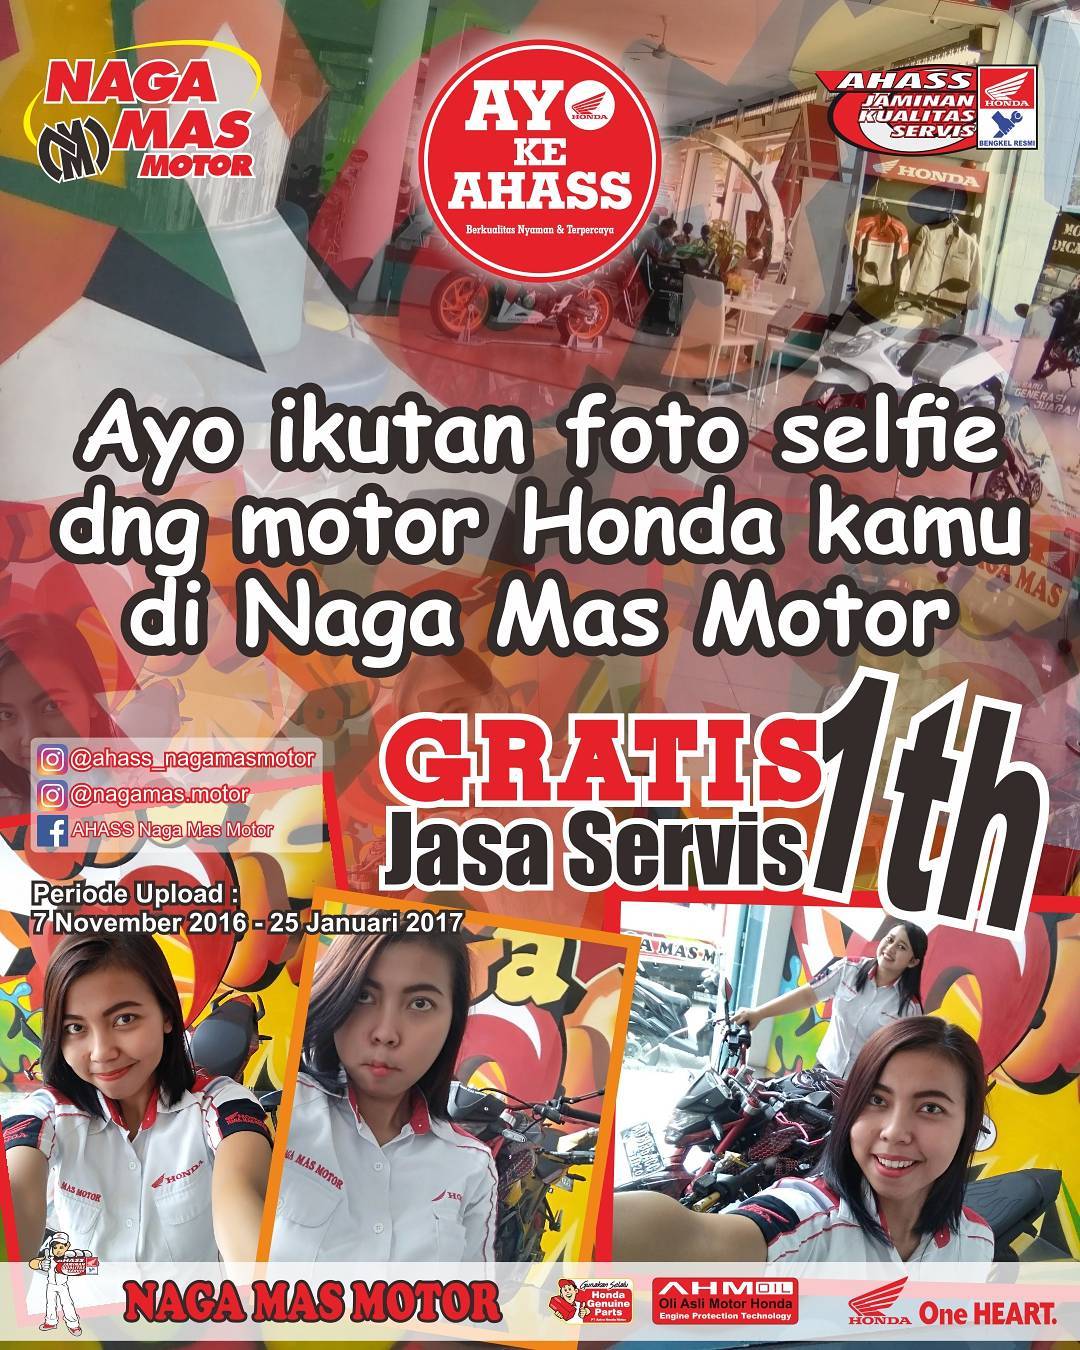 Foto Selfie Bareng Motor Gratis Jasa Servis NAGAMAS MOTOR KLATEN